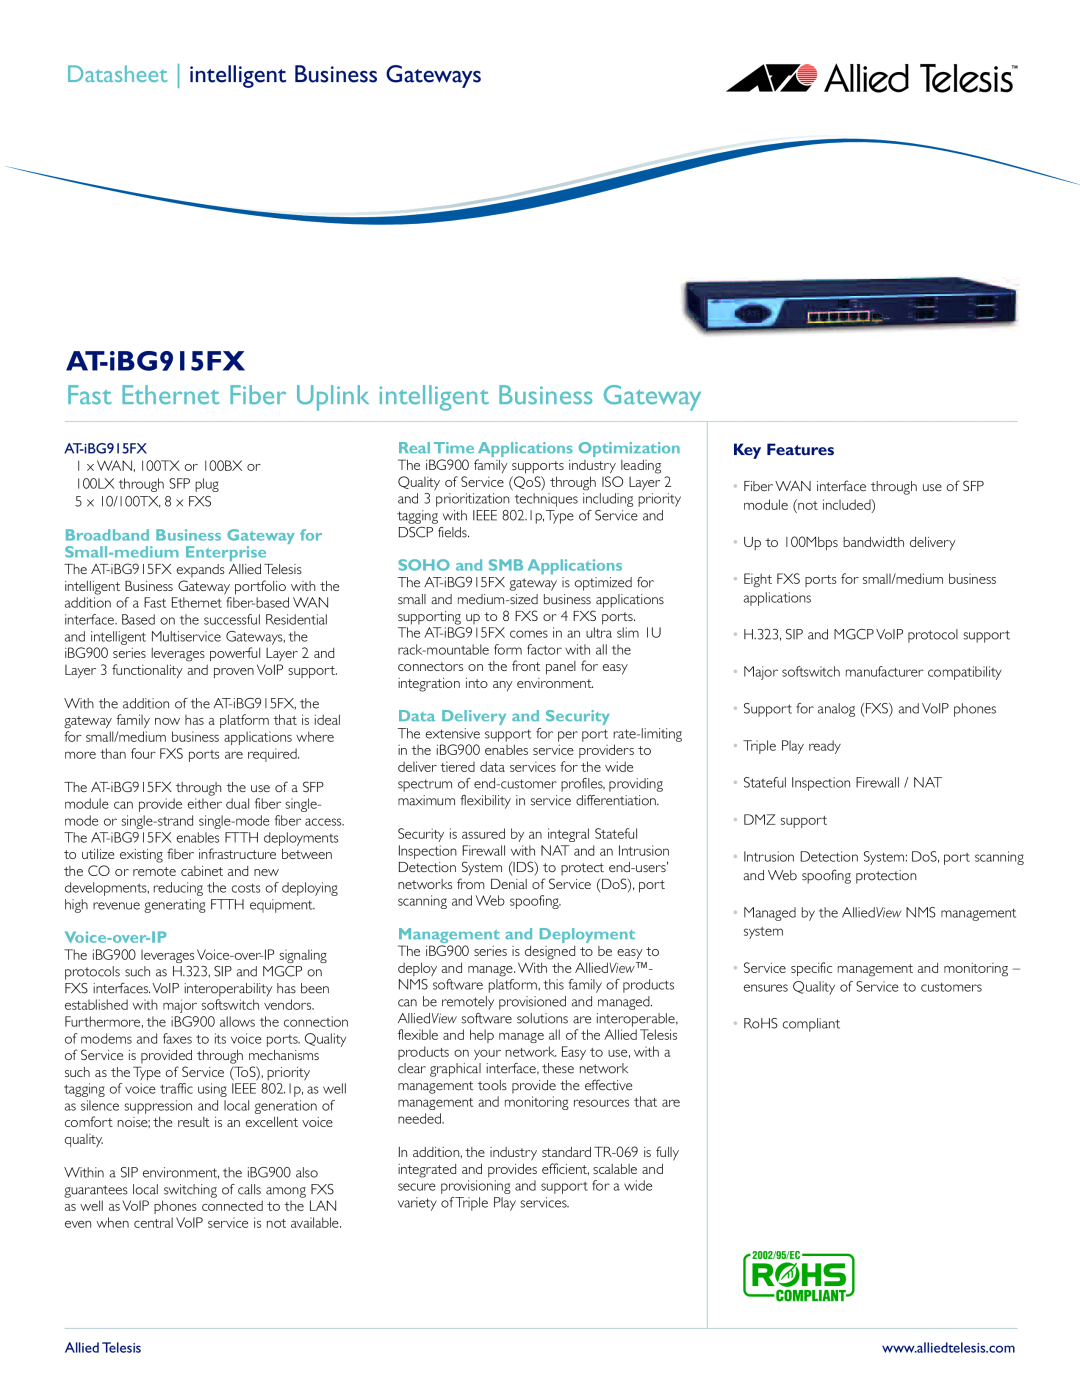 Allied Telesis manual Fast Ethernet Fiber Uplink intelligent Business Gateway, Key Features, AT-iBG915FX 